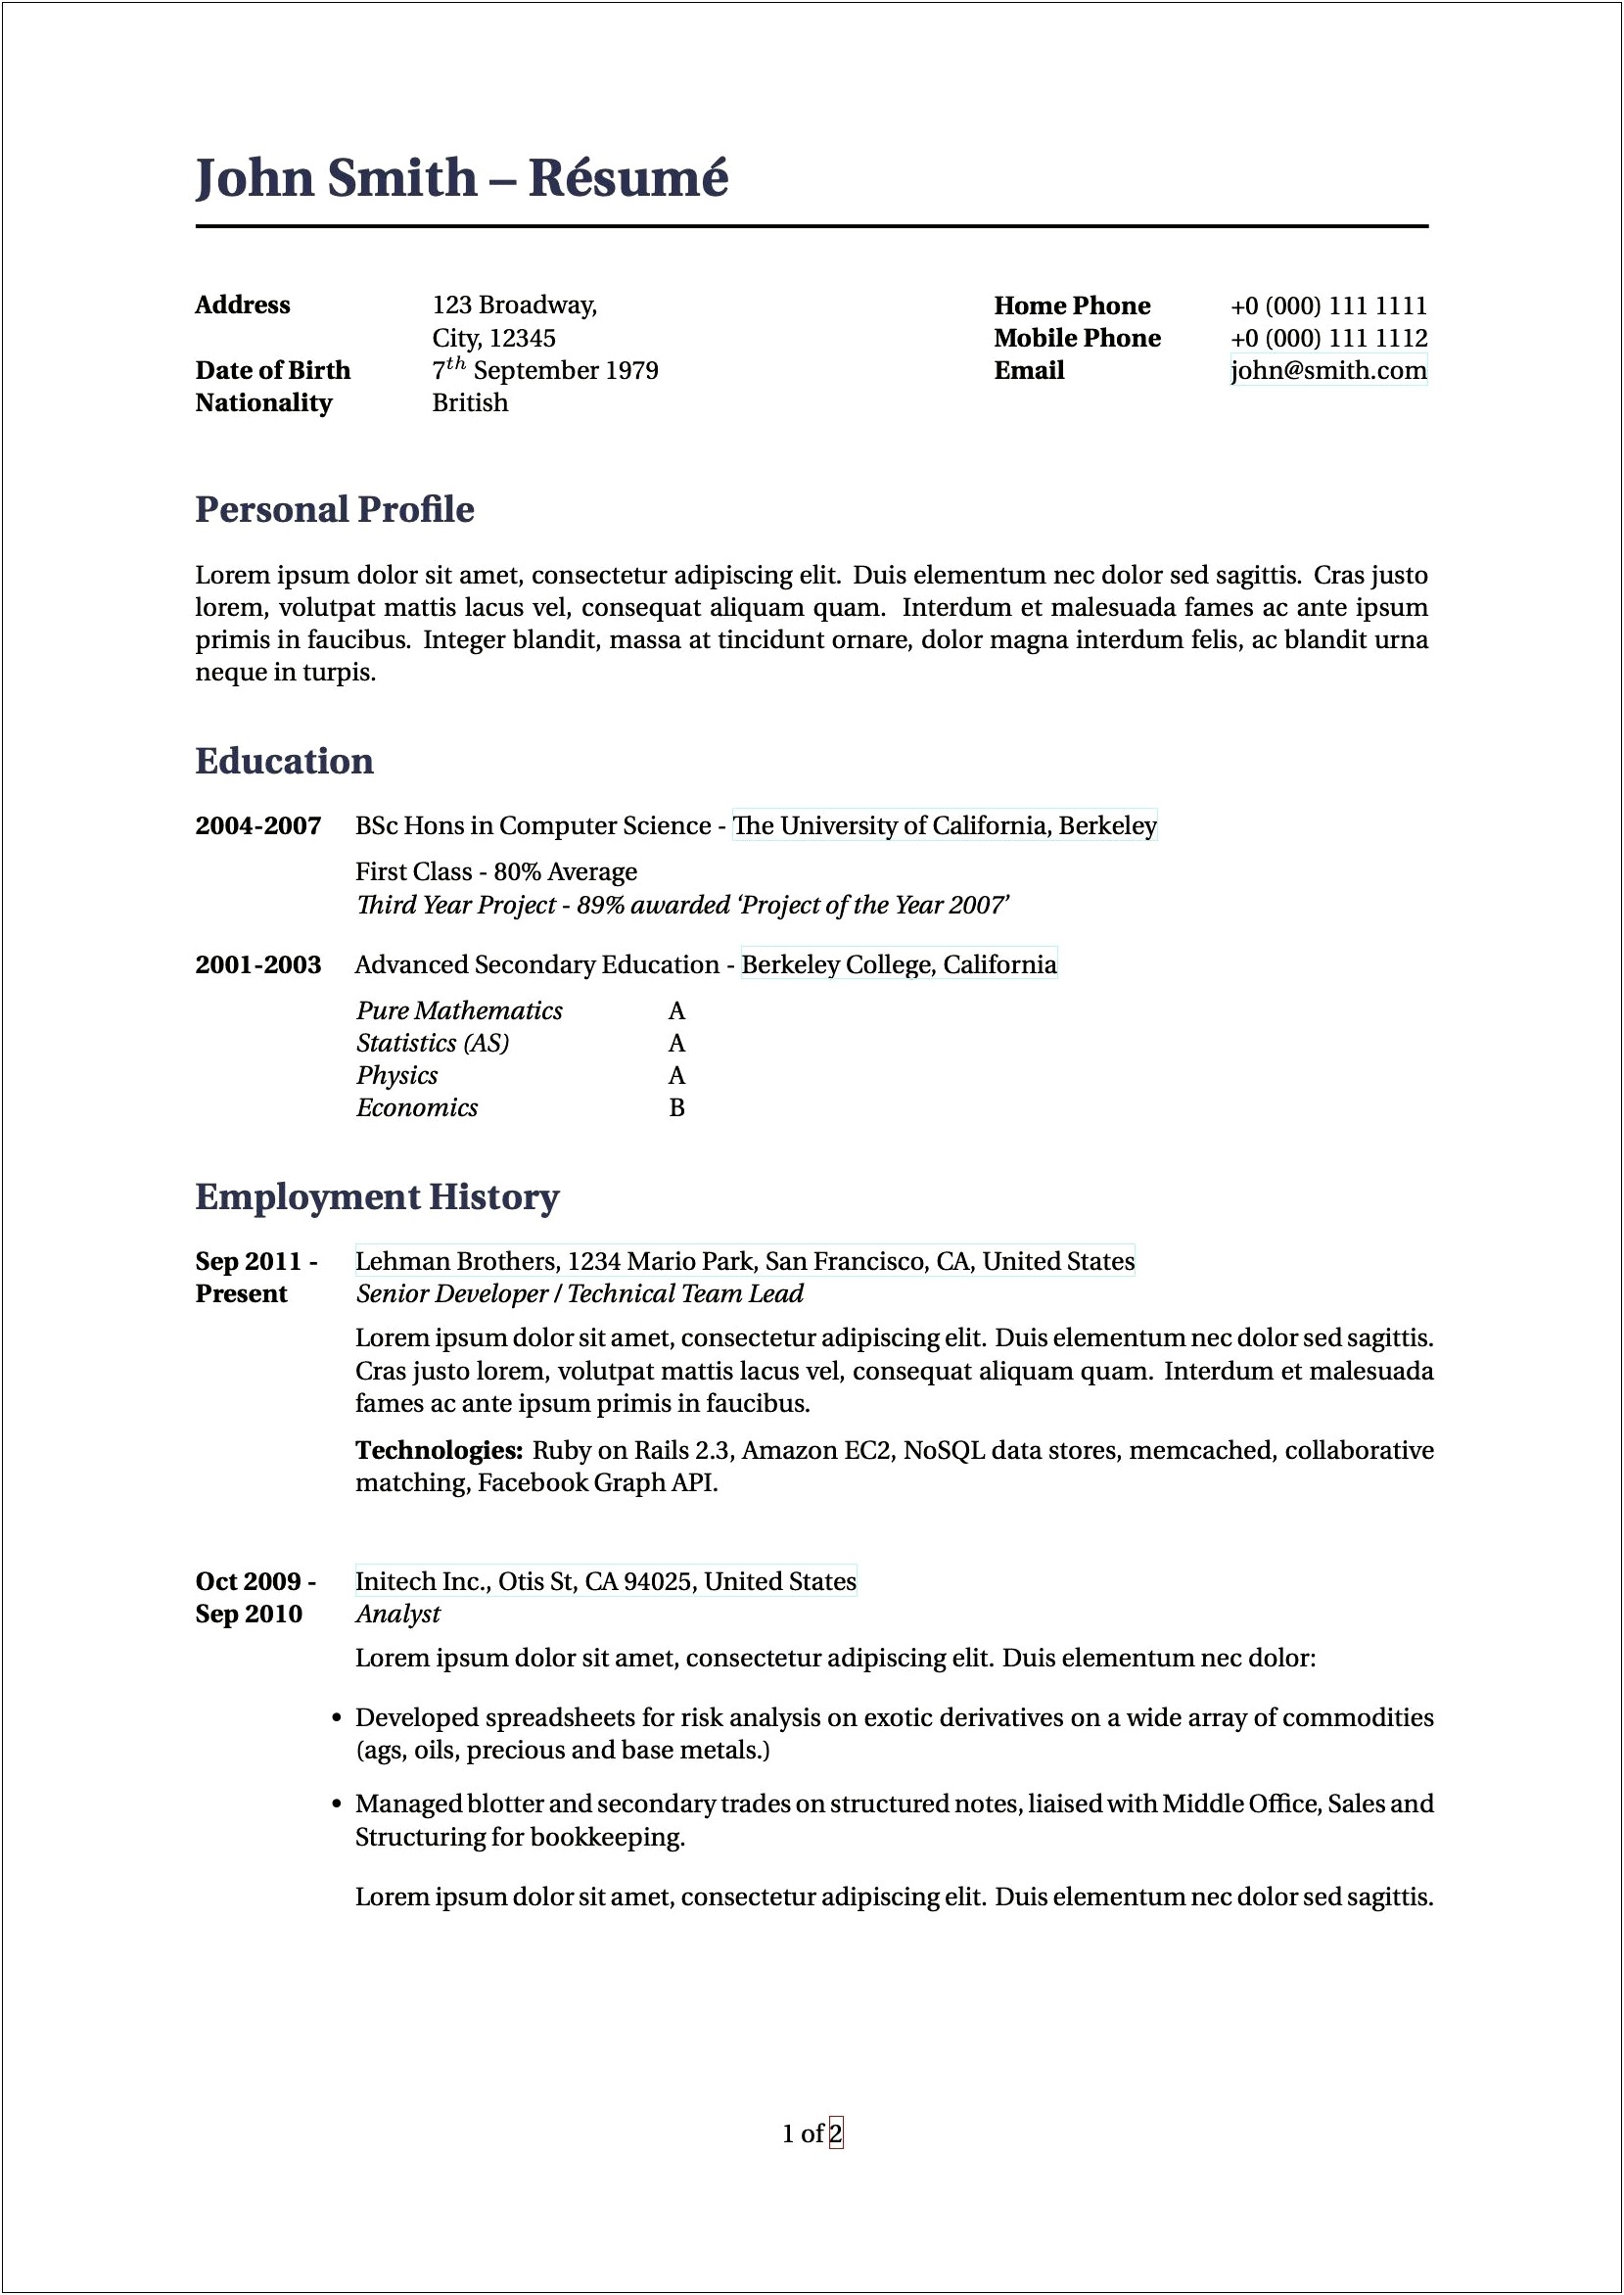 Sample Resume For Recent University Graduate